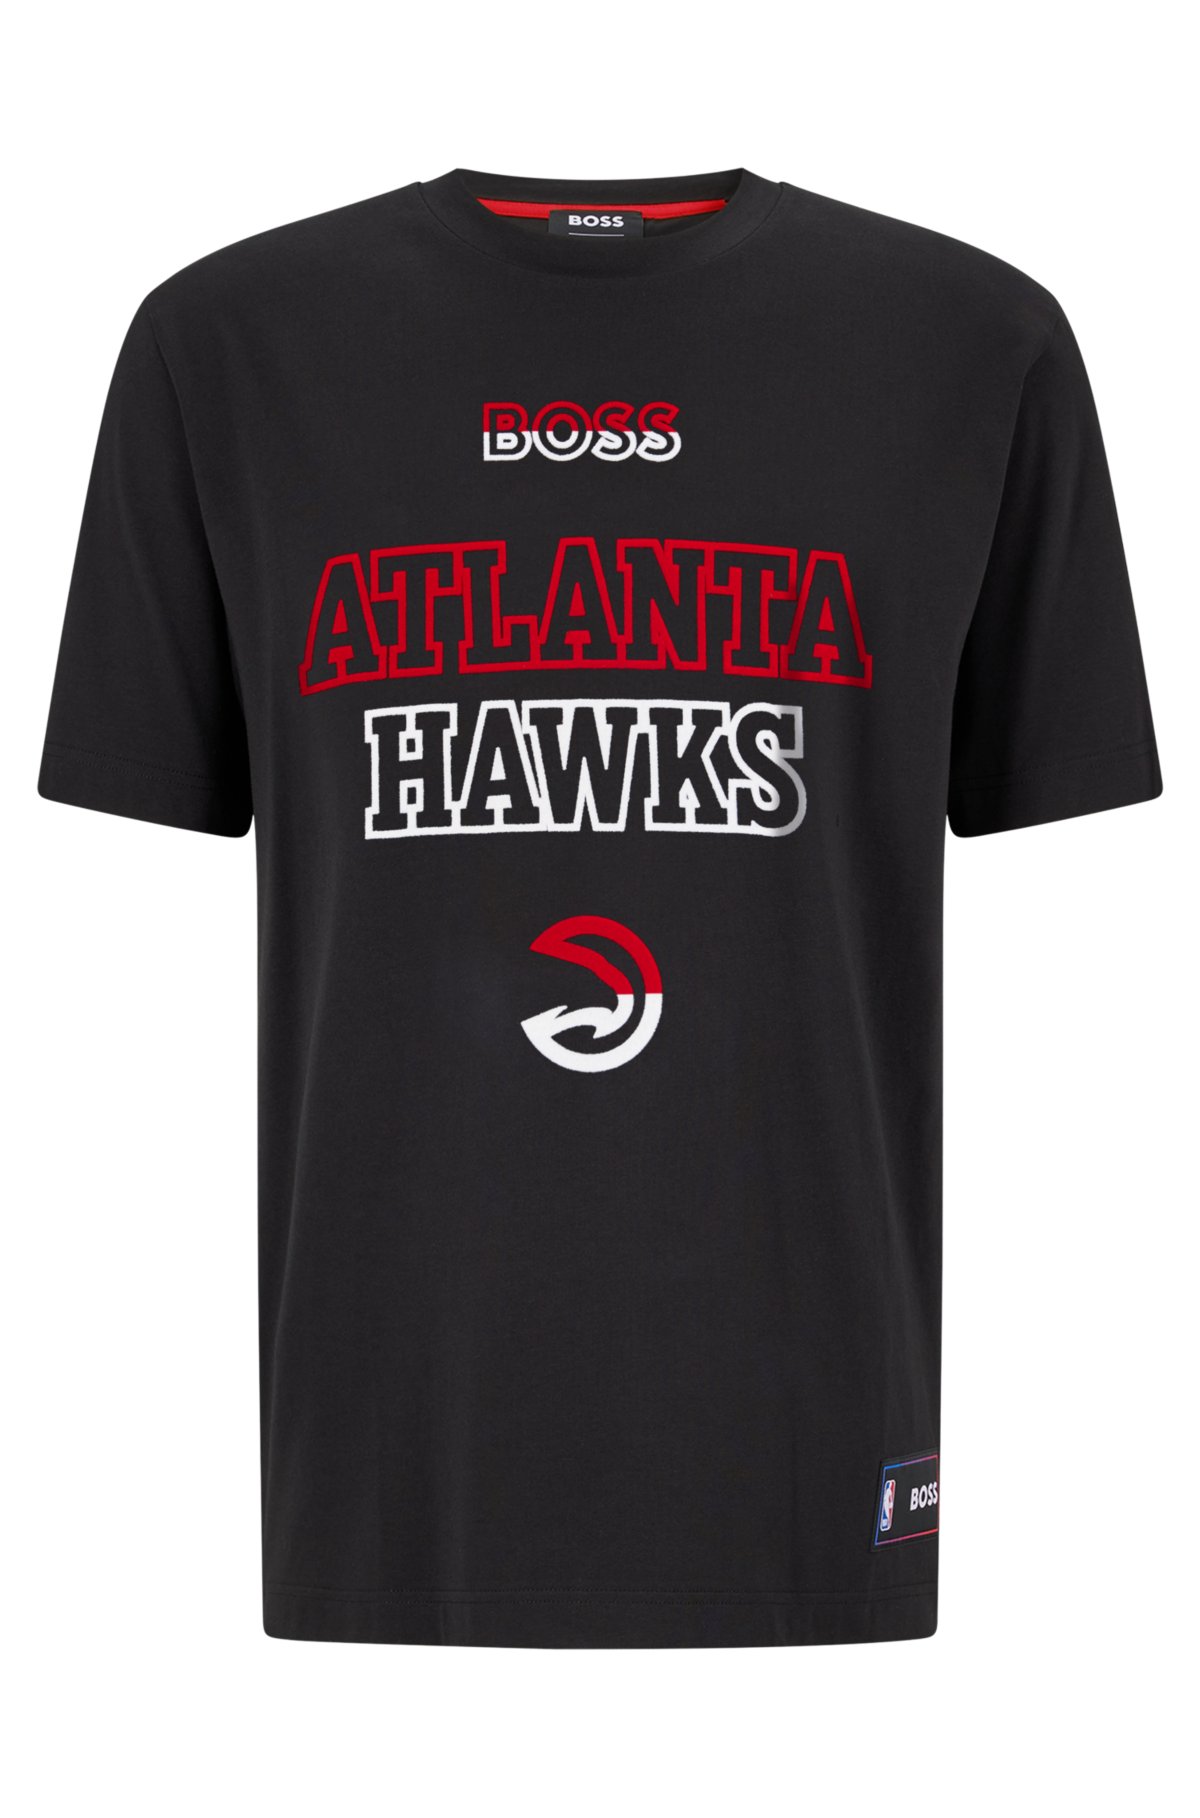 NBA Atlanta Hawks Men's Full Color Logo Polo Shirt, Medium, White :  : Fashion